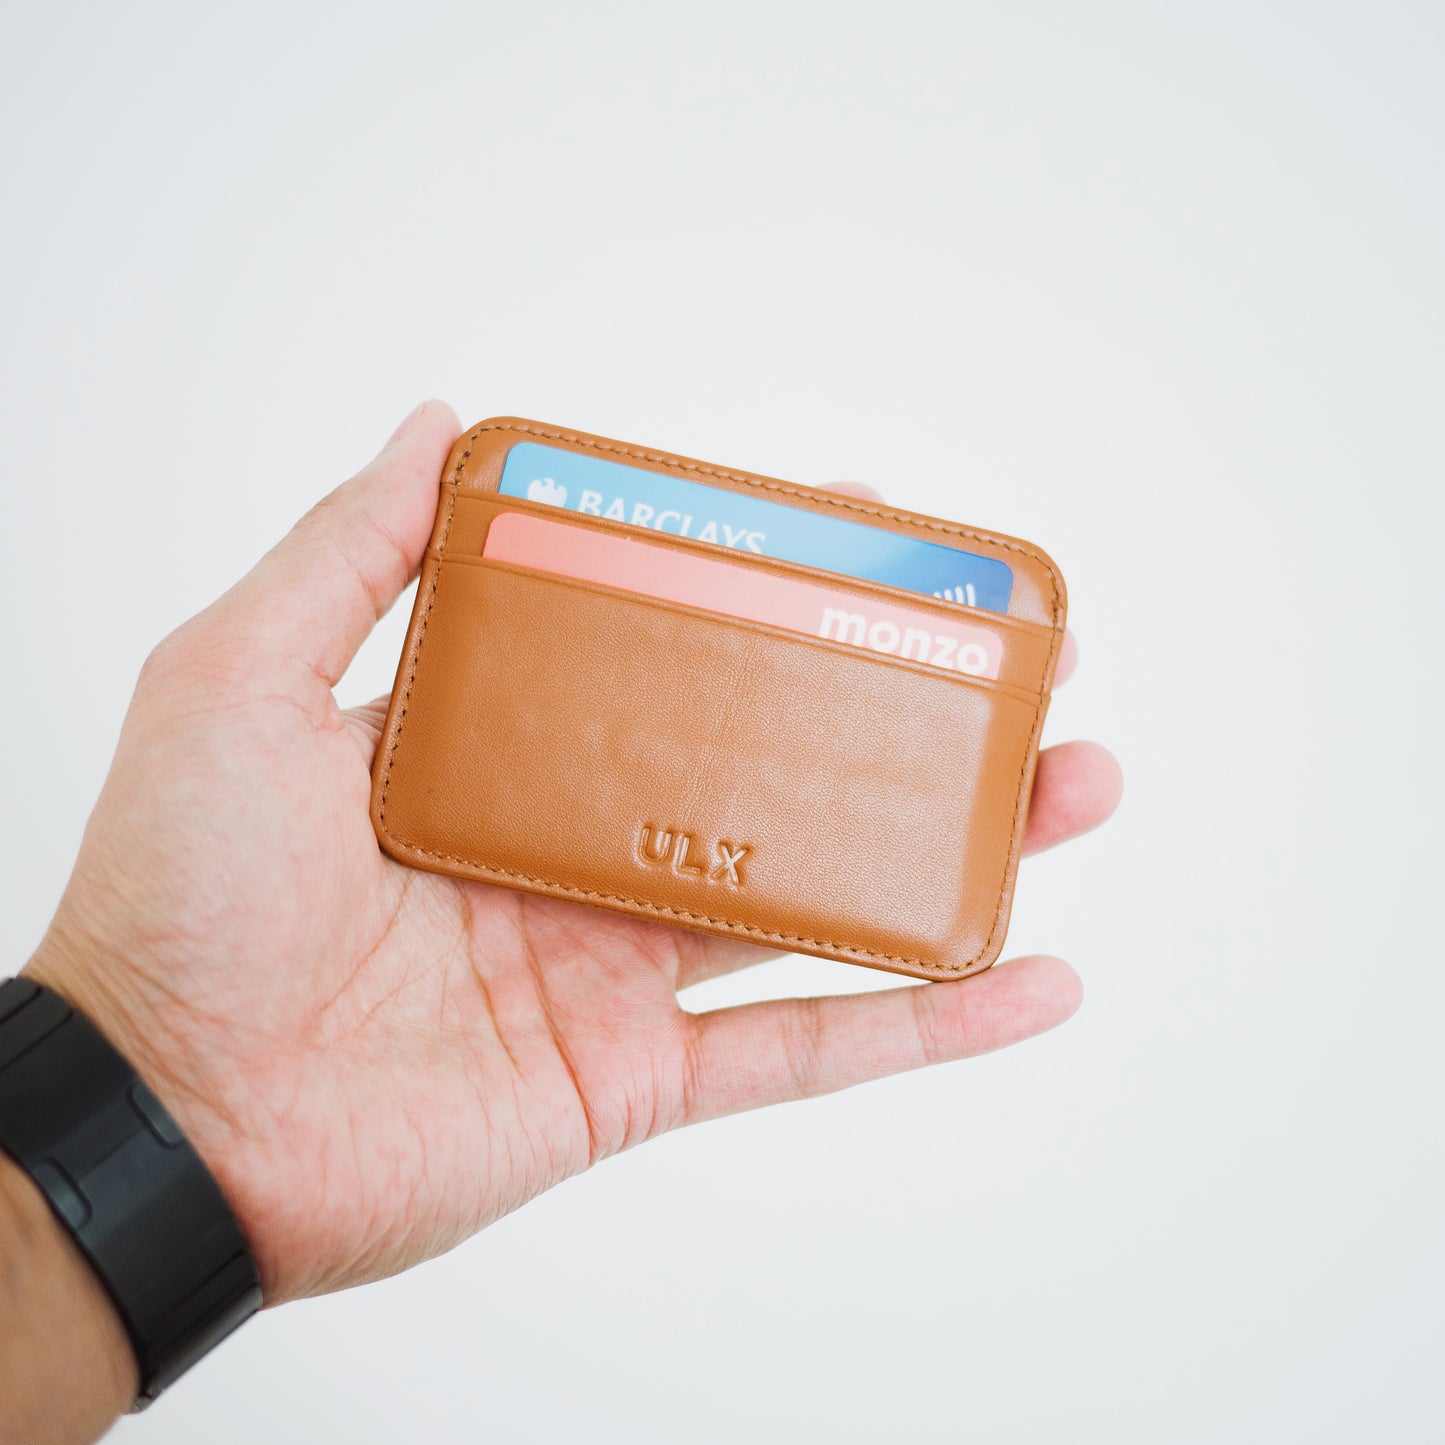 Genuine Leather Card Holder - Brown